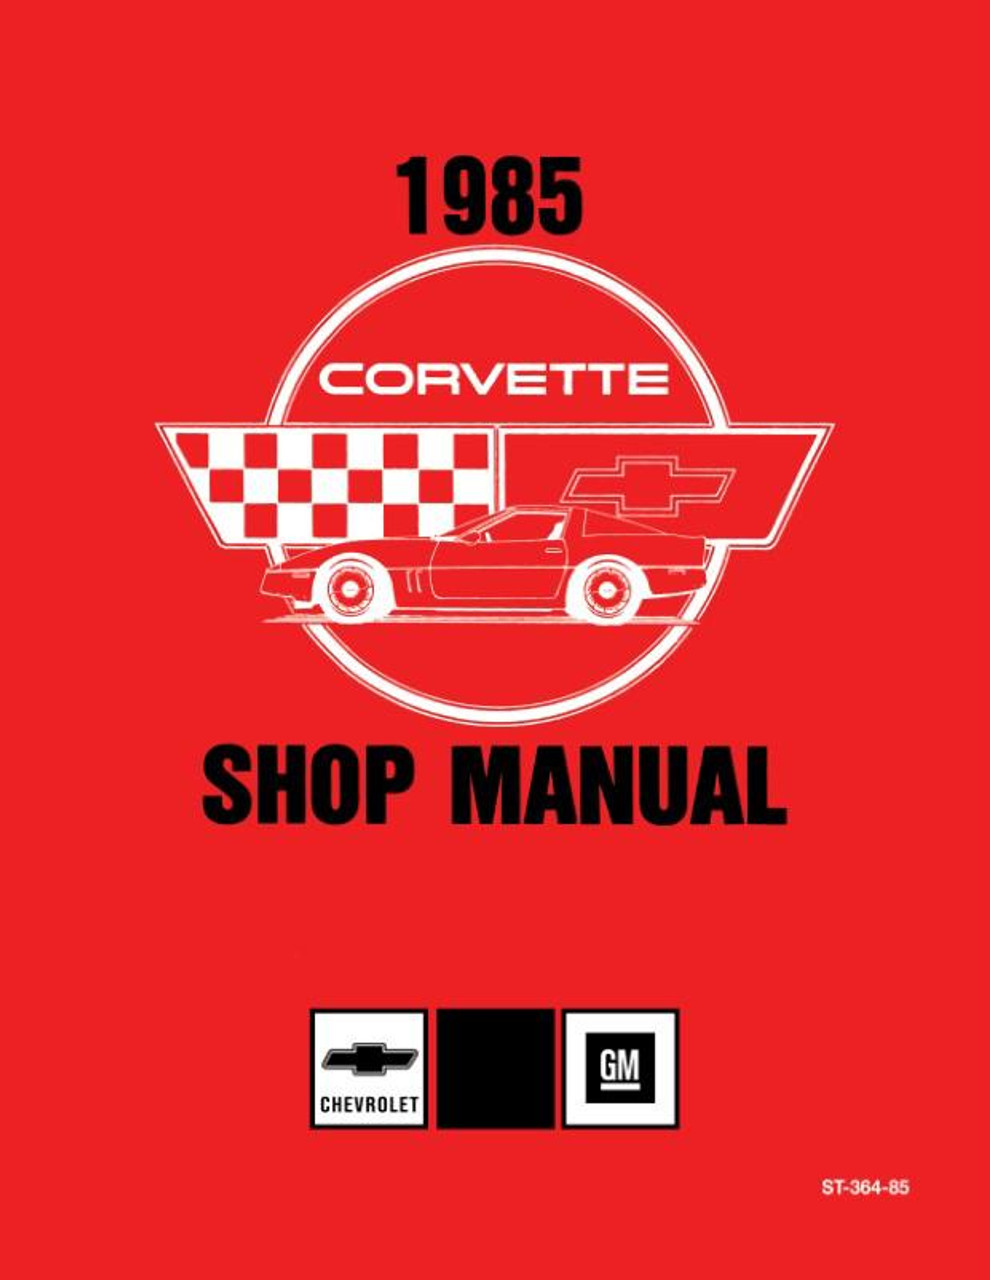 1985-chevy-corvette-shop-manual-7__59890.1660254957.jpg